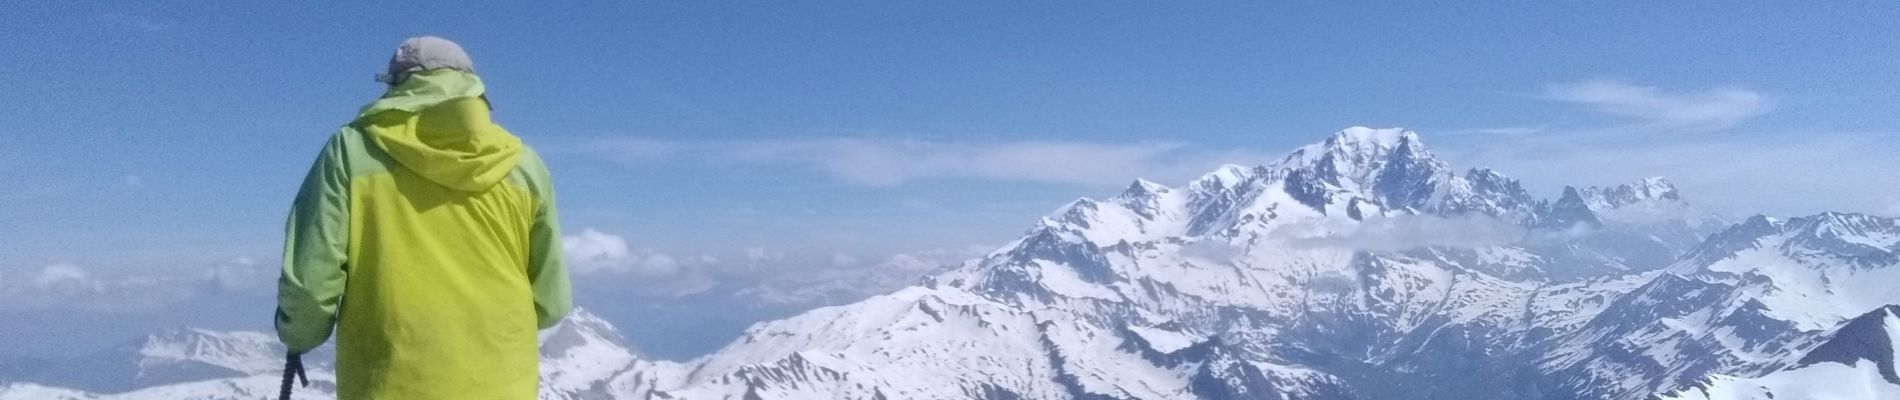 Percorso Sci alpinismo Bourg-Saint-Maurice - pointe de la combe neuve et Roc de l'enfer - Photo